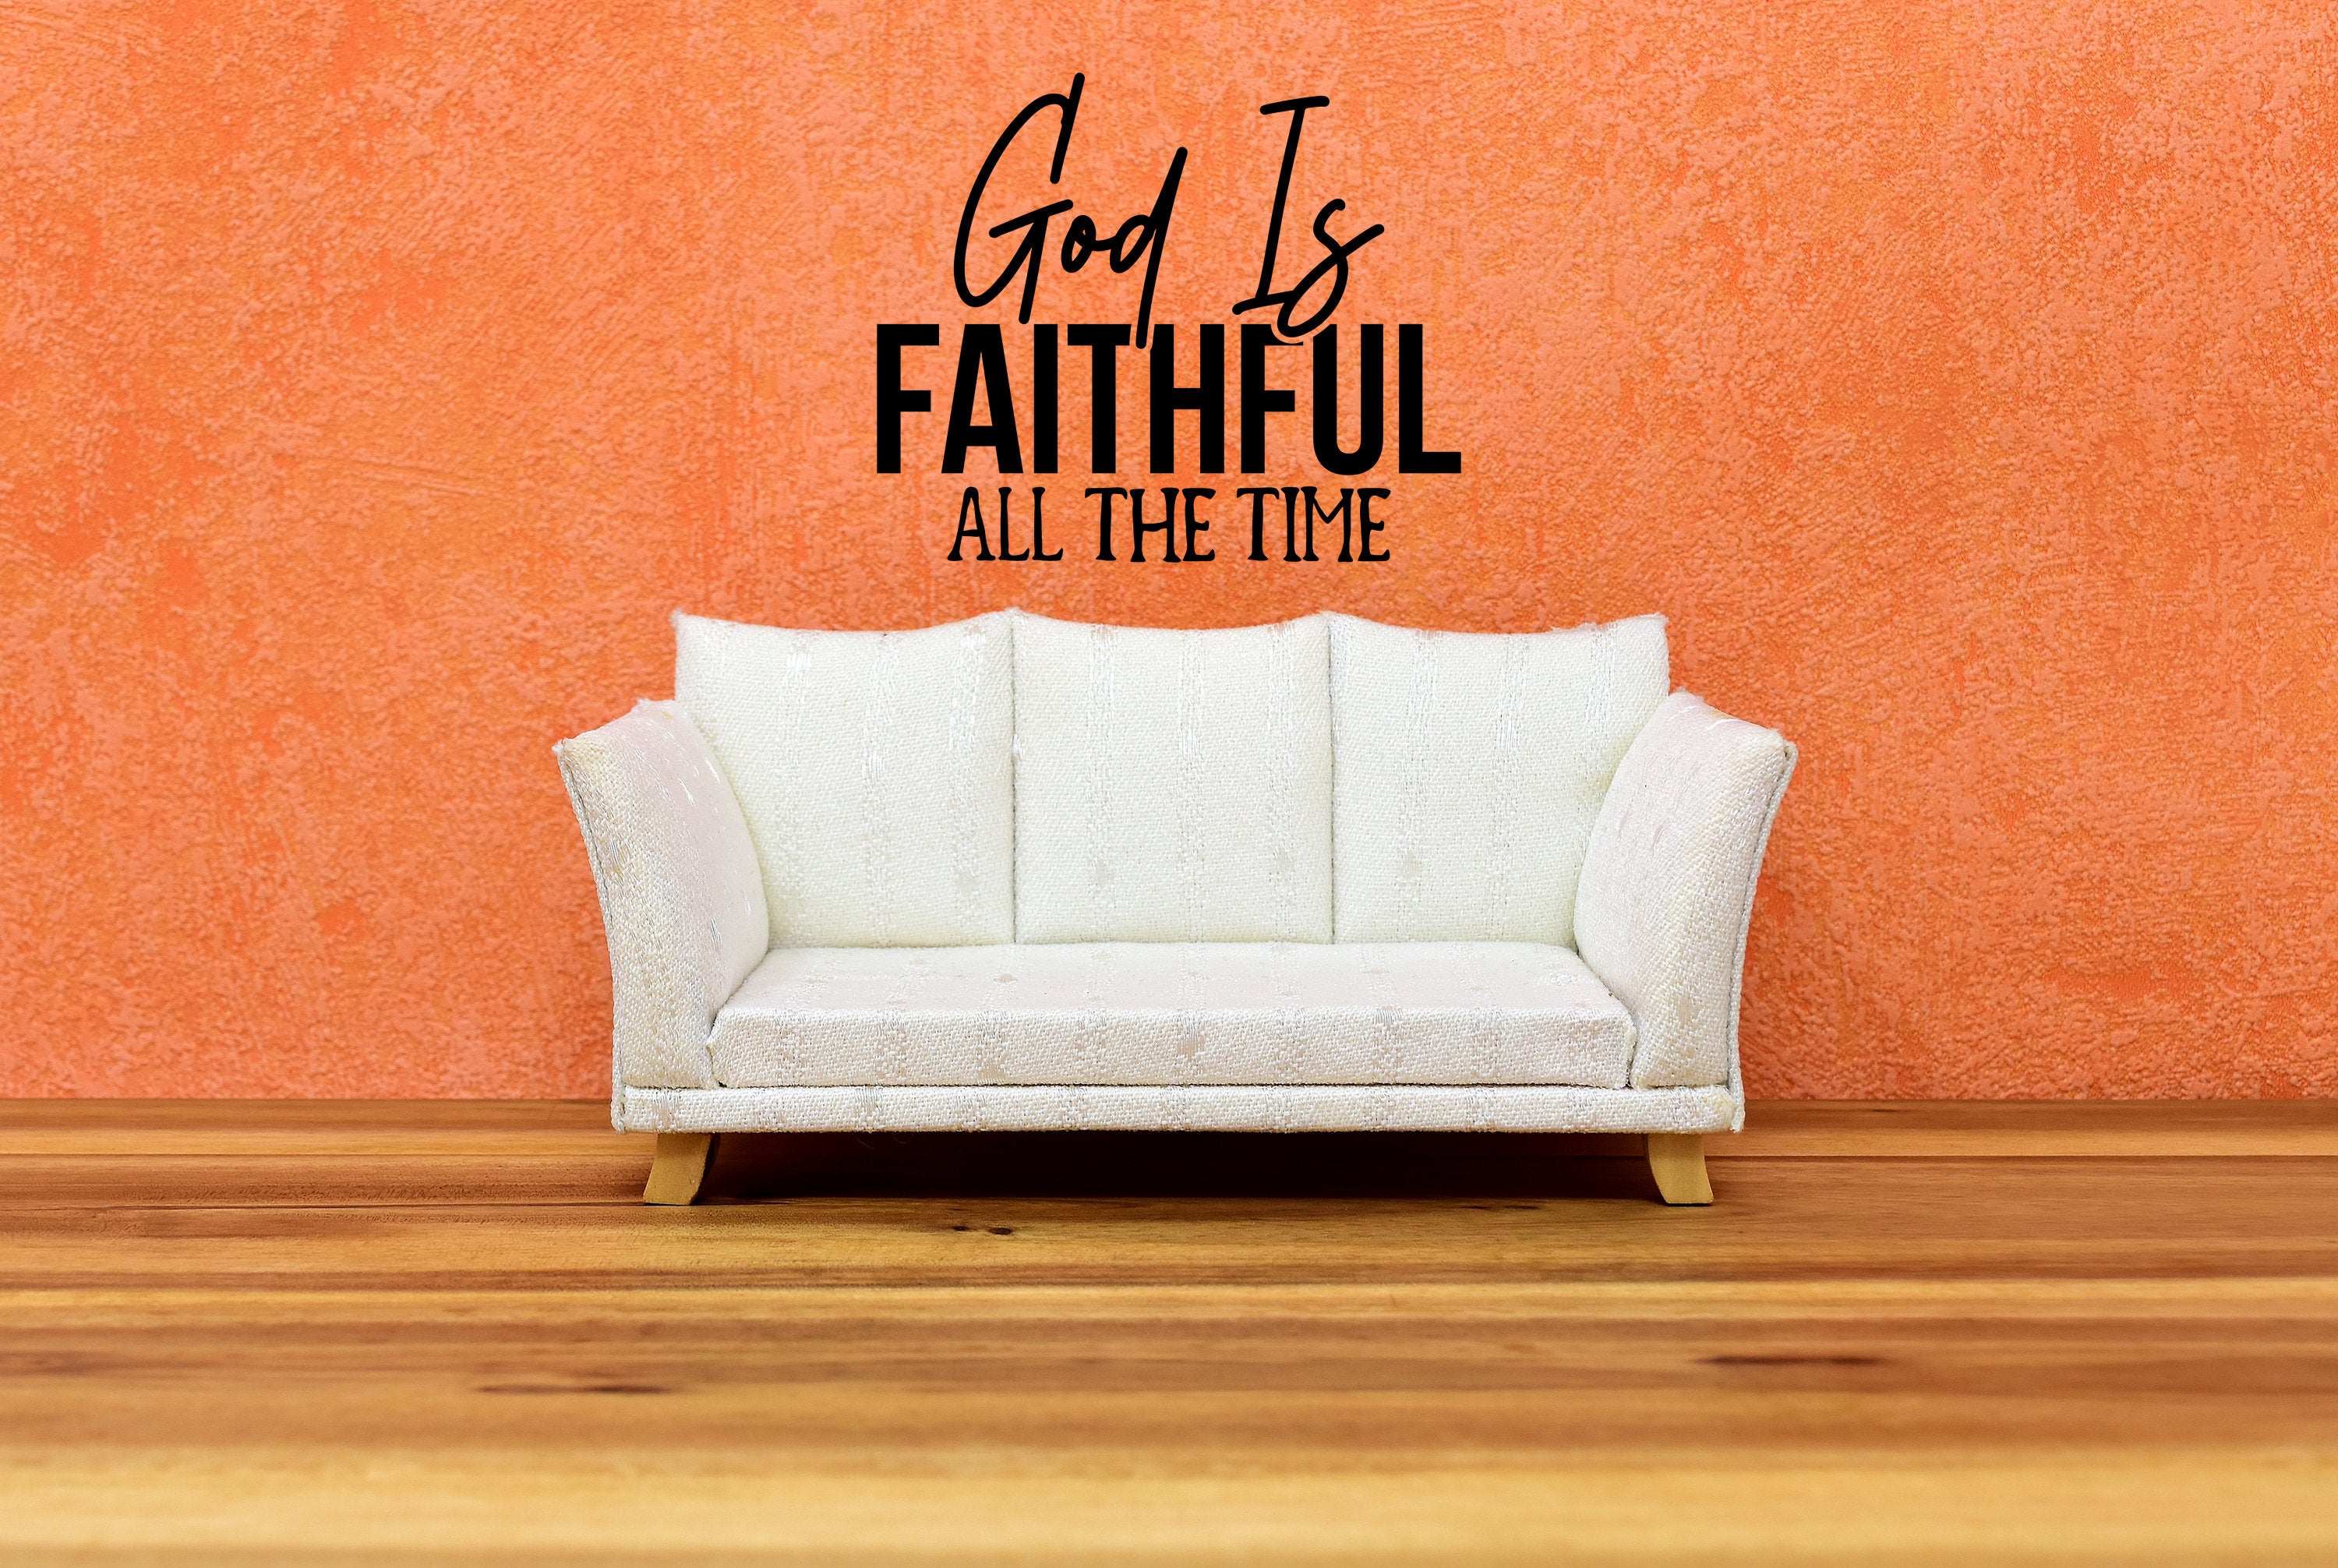 God is Faithful All the Time Vinyl Wall Decal - Religious, Christian Home Decor for Doors, Housewarming Gift,